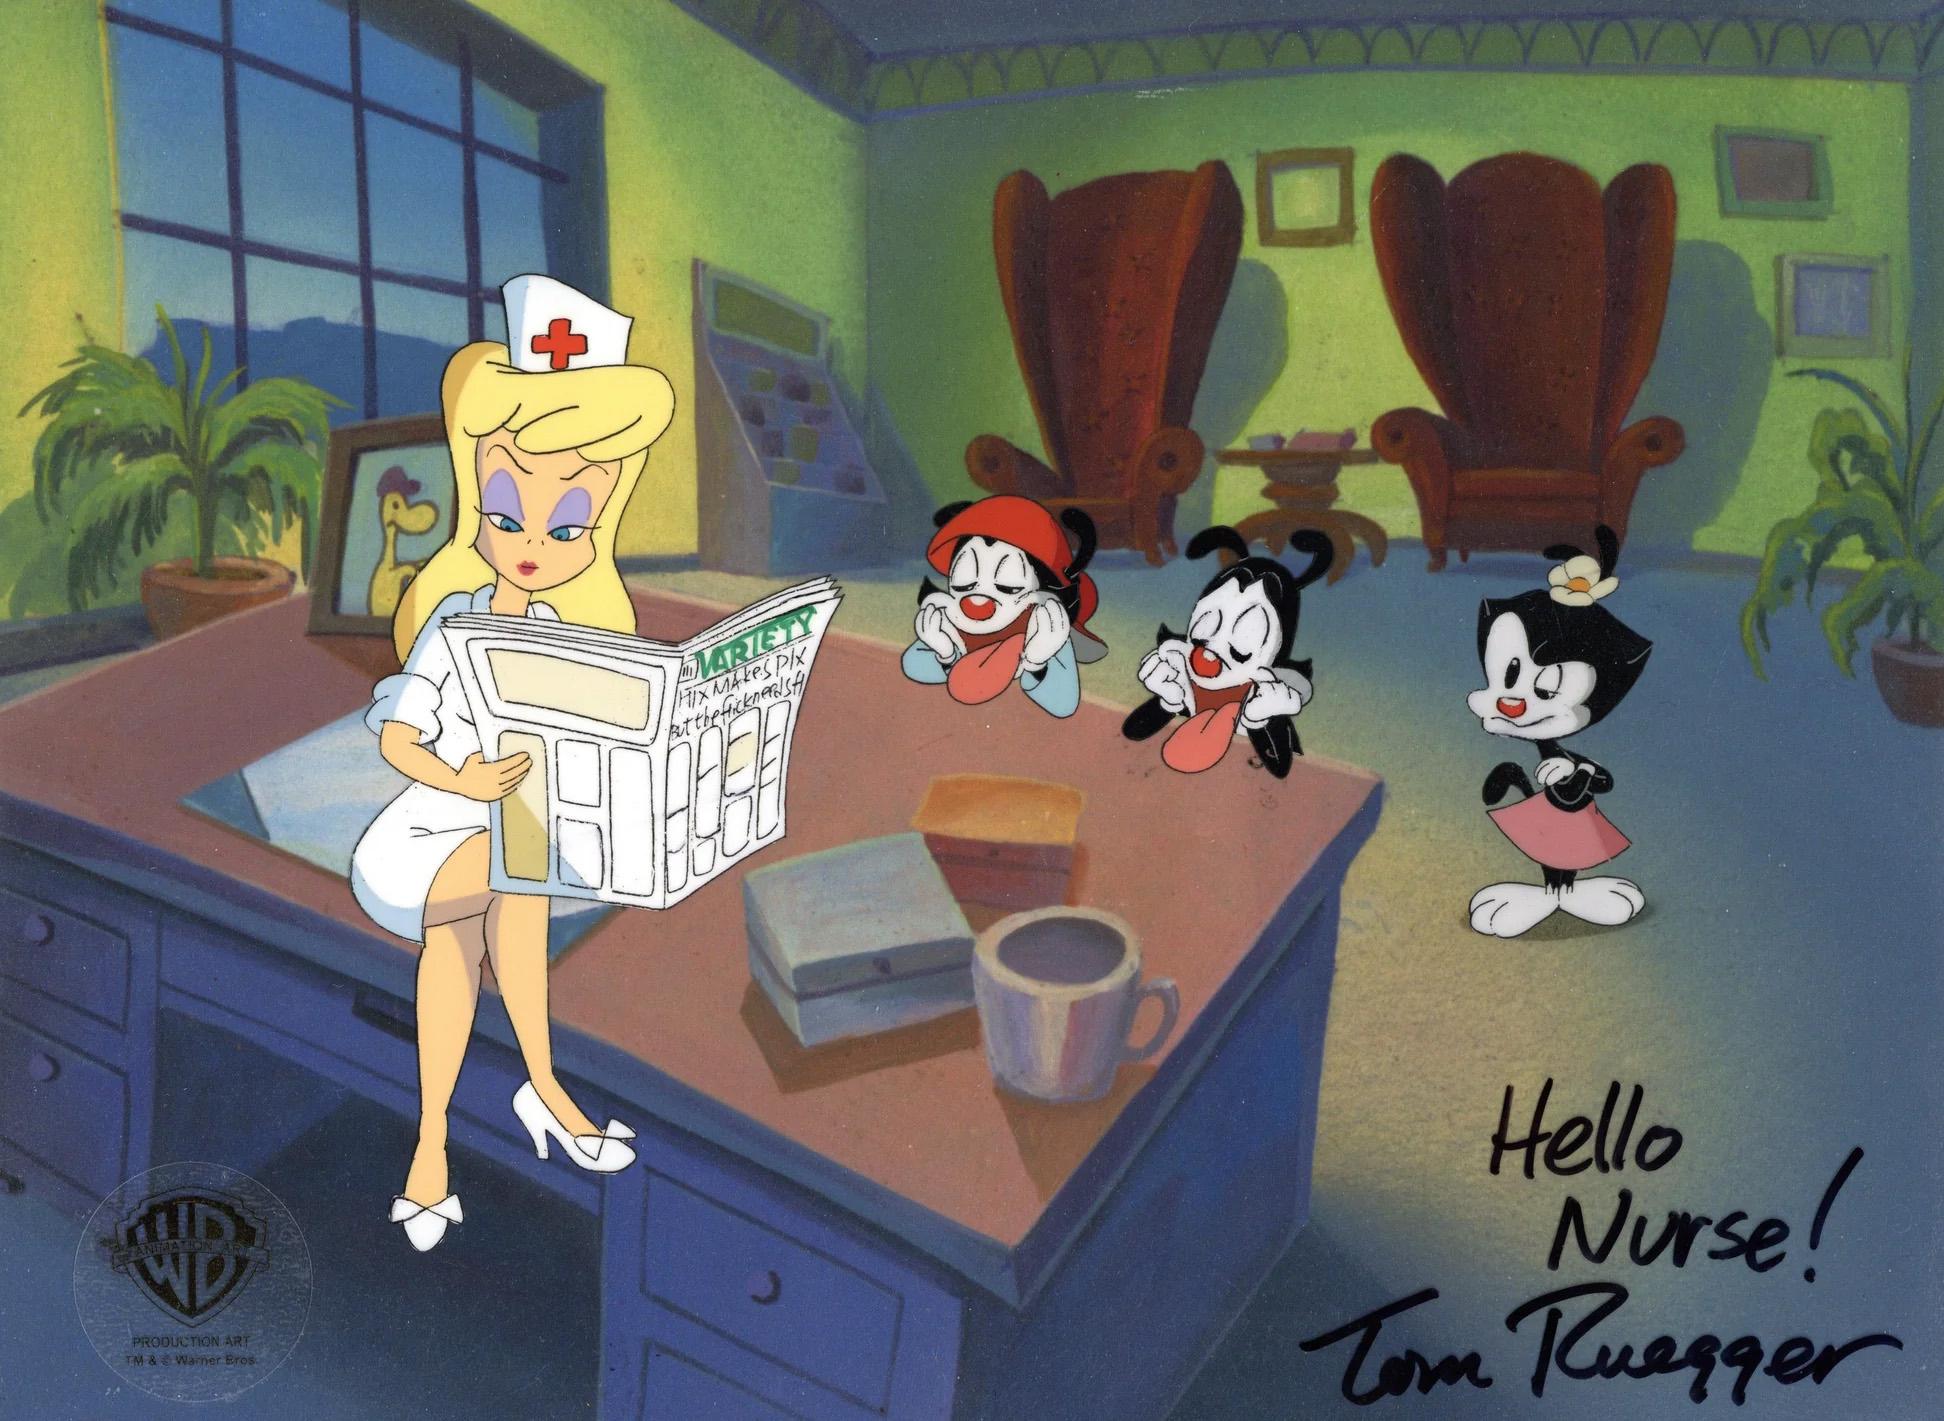 Animaniacs Original Production Cel Signed by Tom Ruegger: "Hello Nurse!" - Art by Warner Bros. Studio Artists